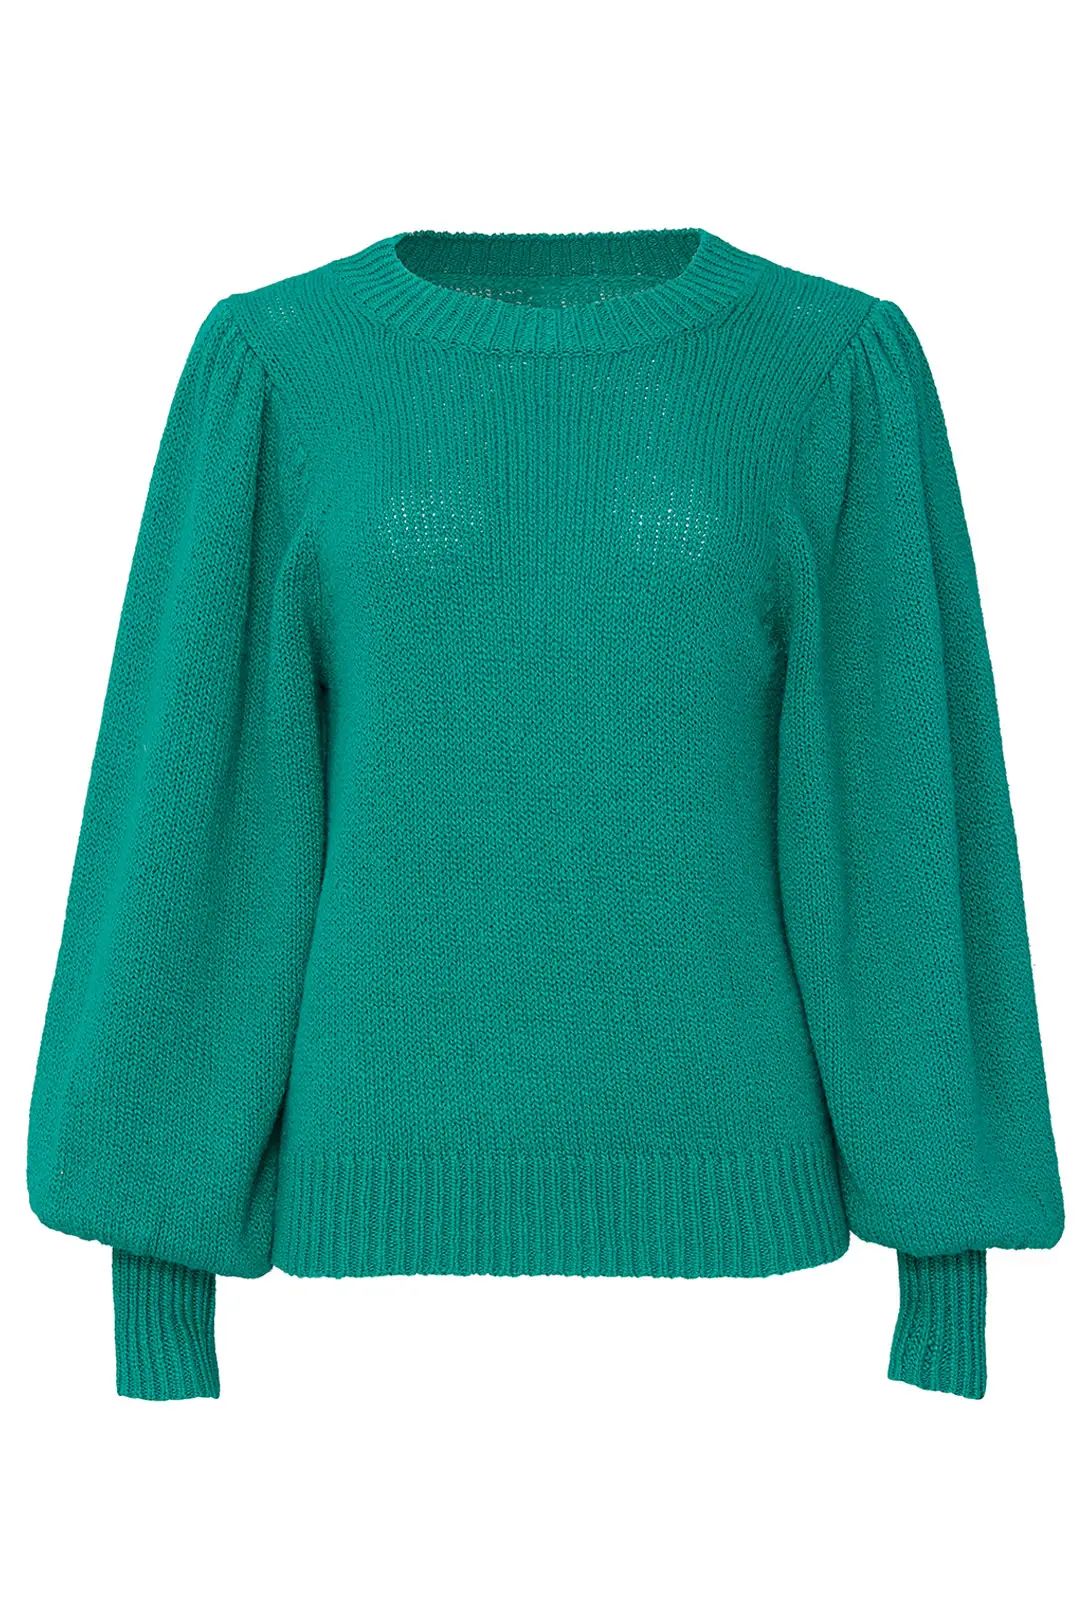 525 America Green Puff Sleeve Sweater | Rent The Runway